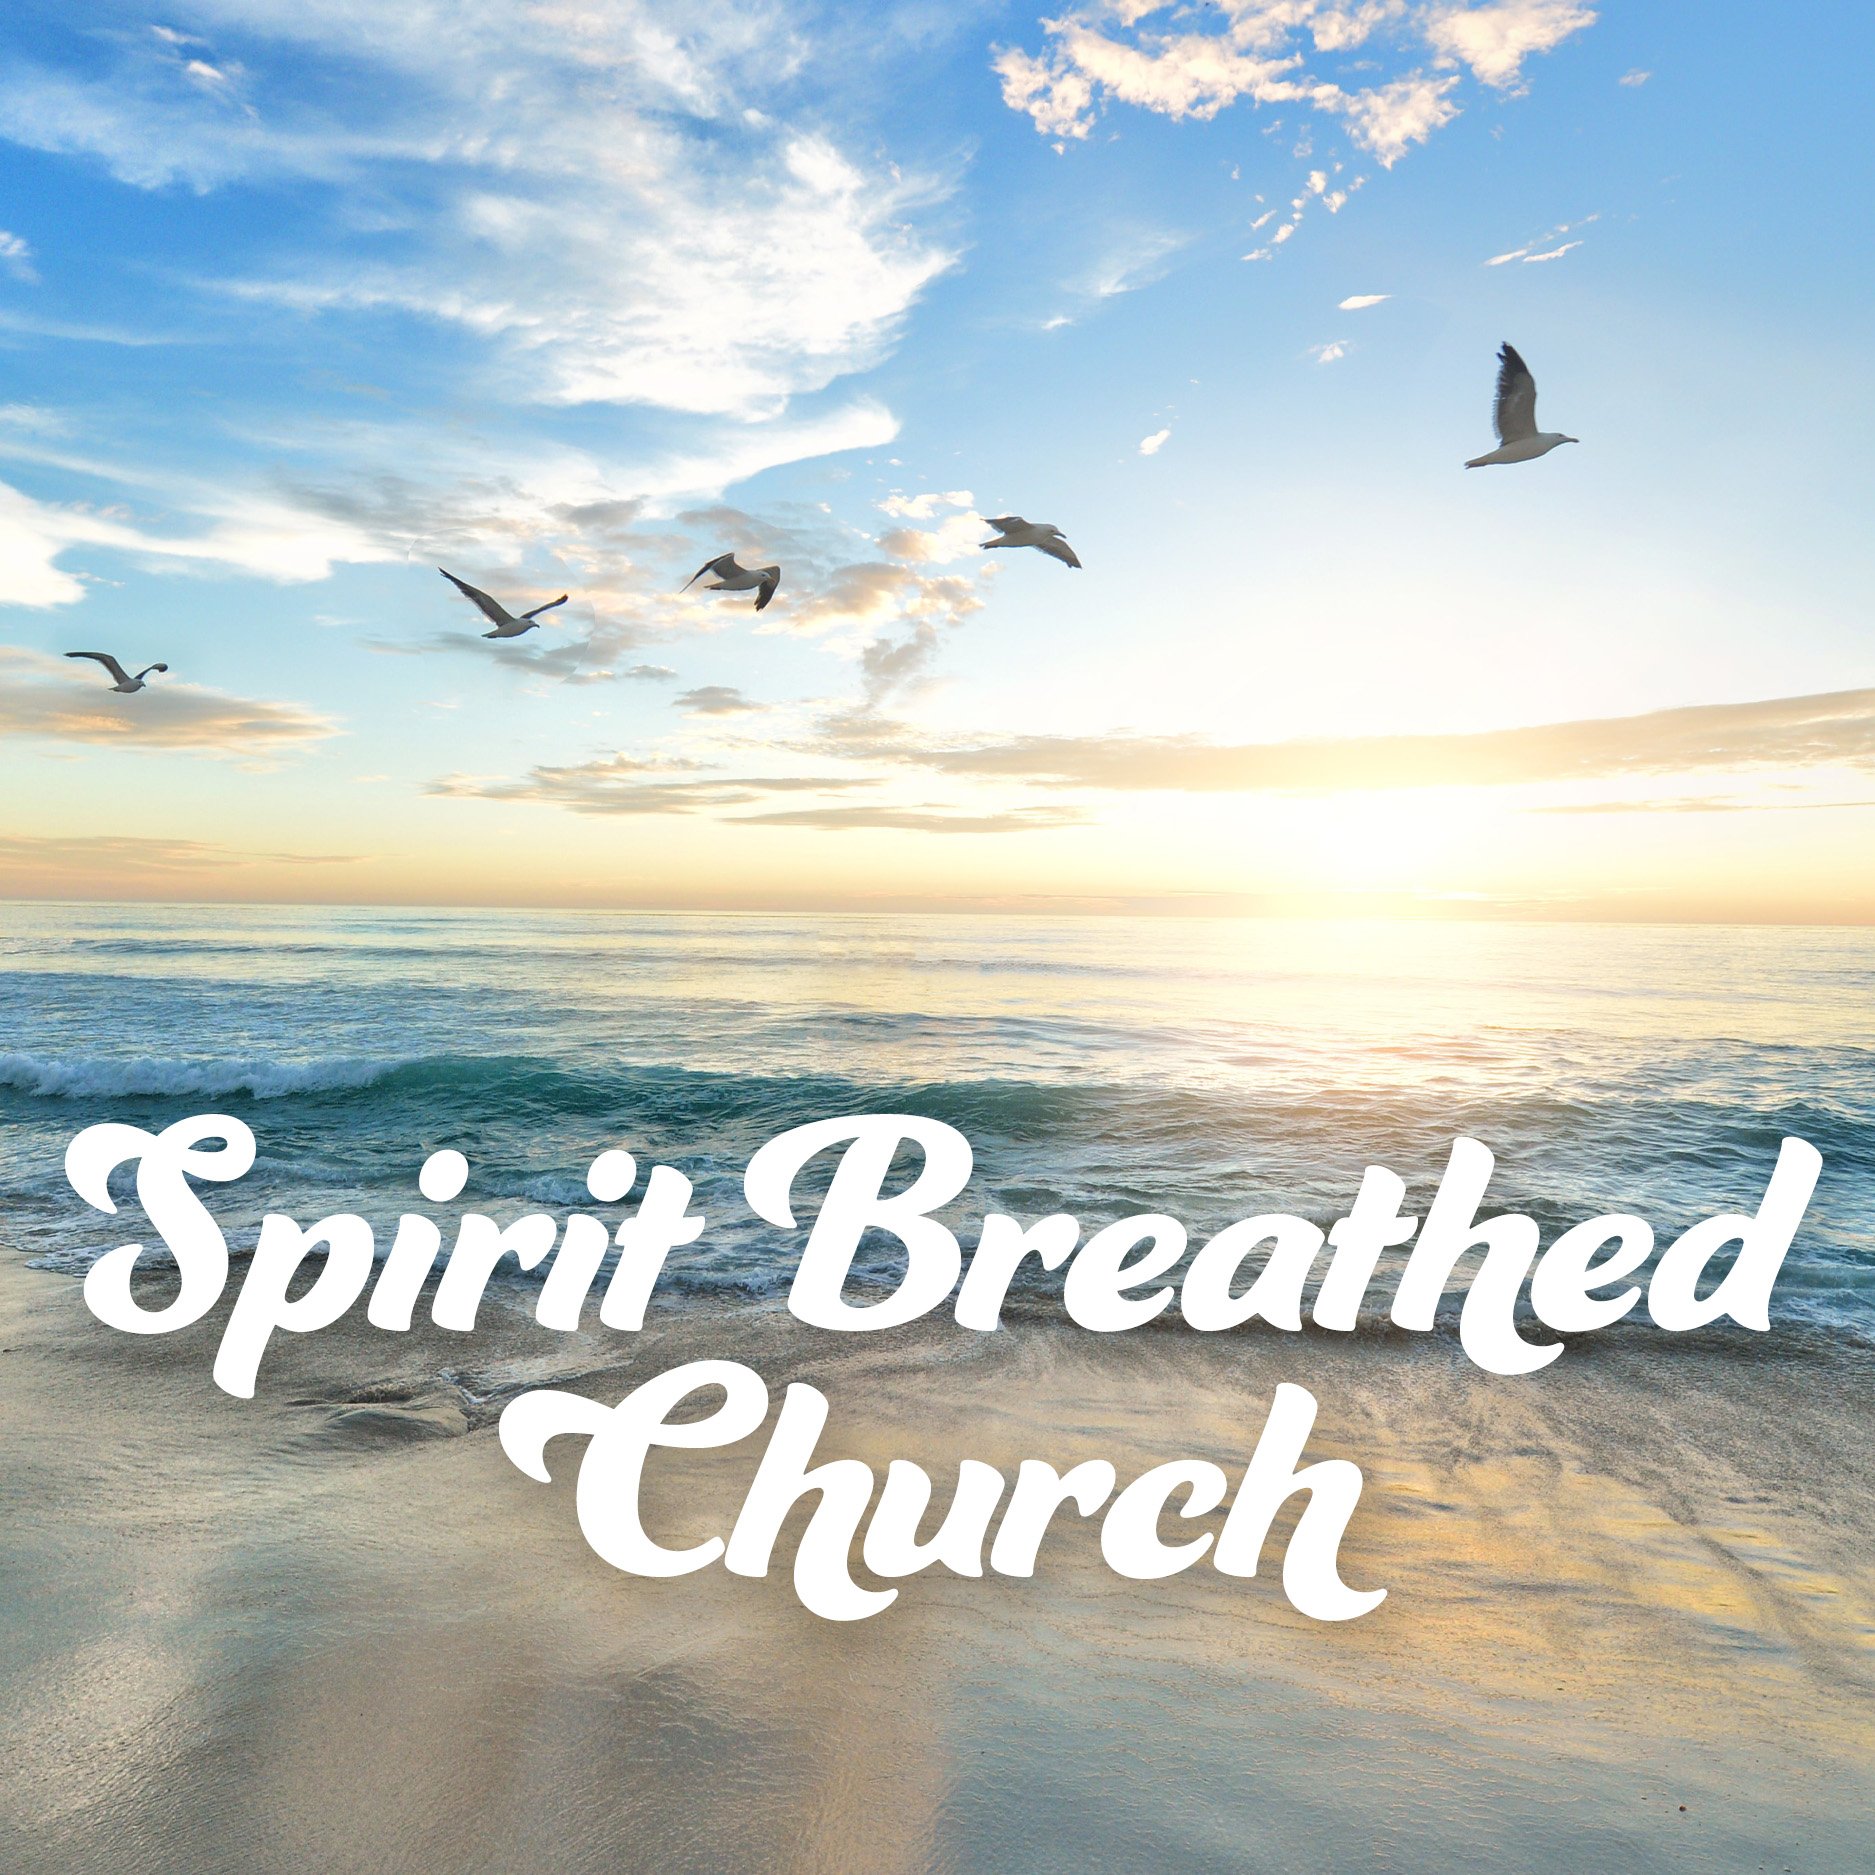 Spirit Breathed Church-square.jpg